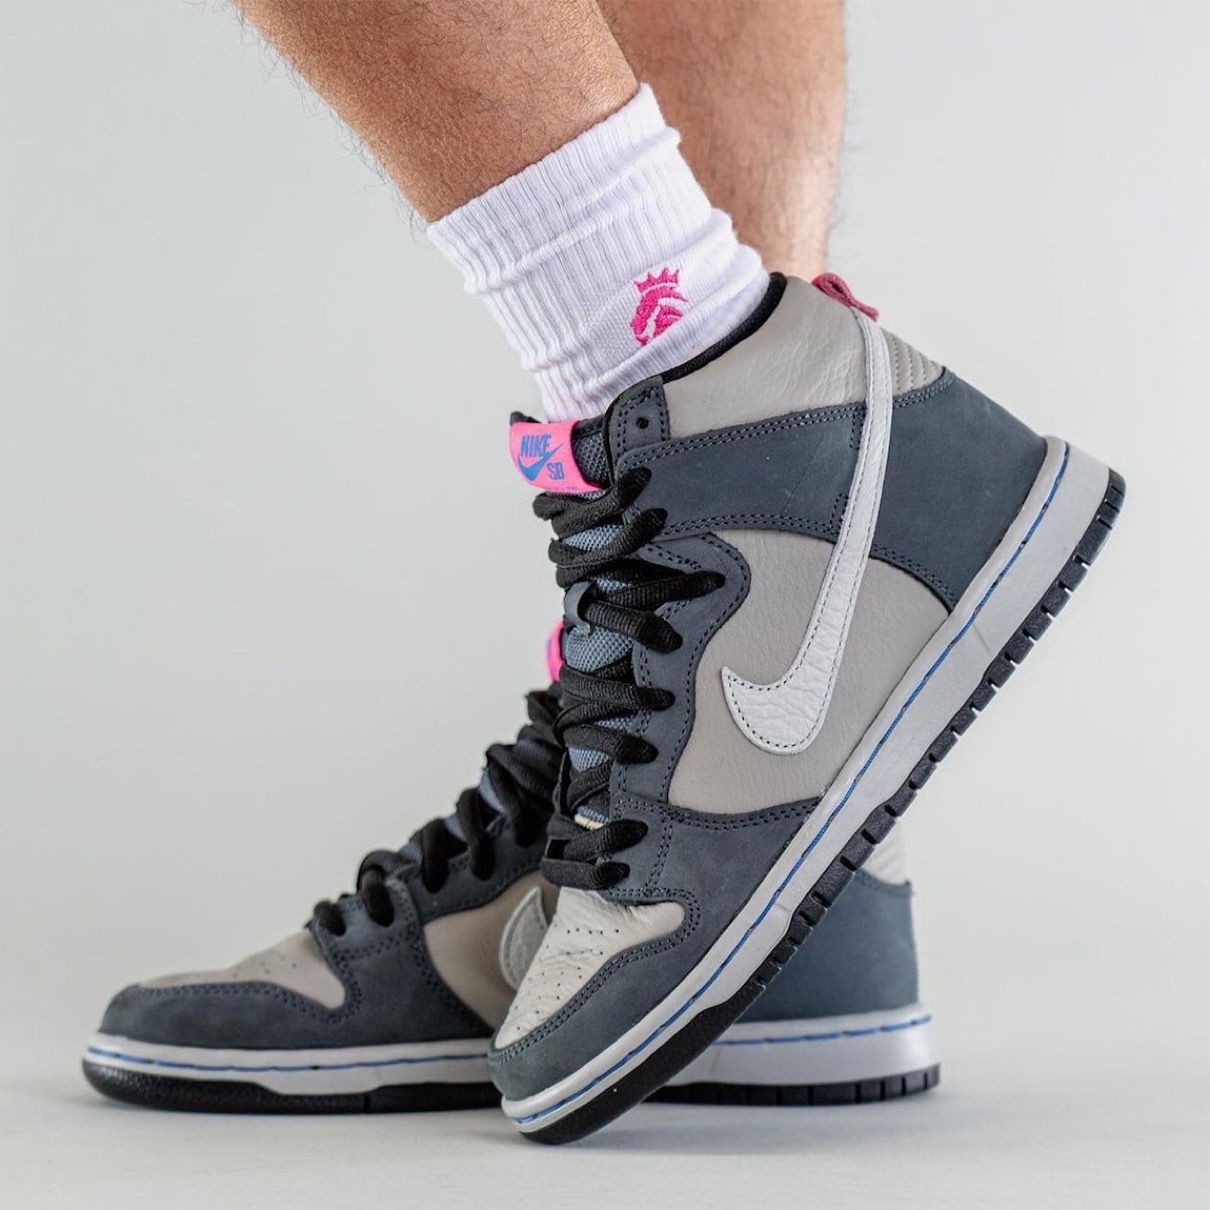 Nike SB】Dunk High Pro “Medium Grey”が国内1月8日に発売予定 | UP TO ...